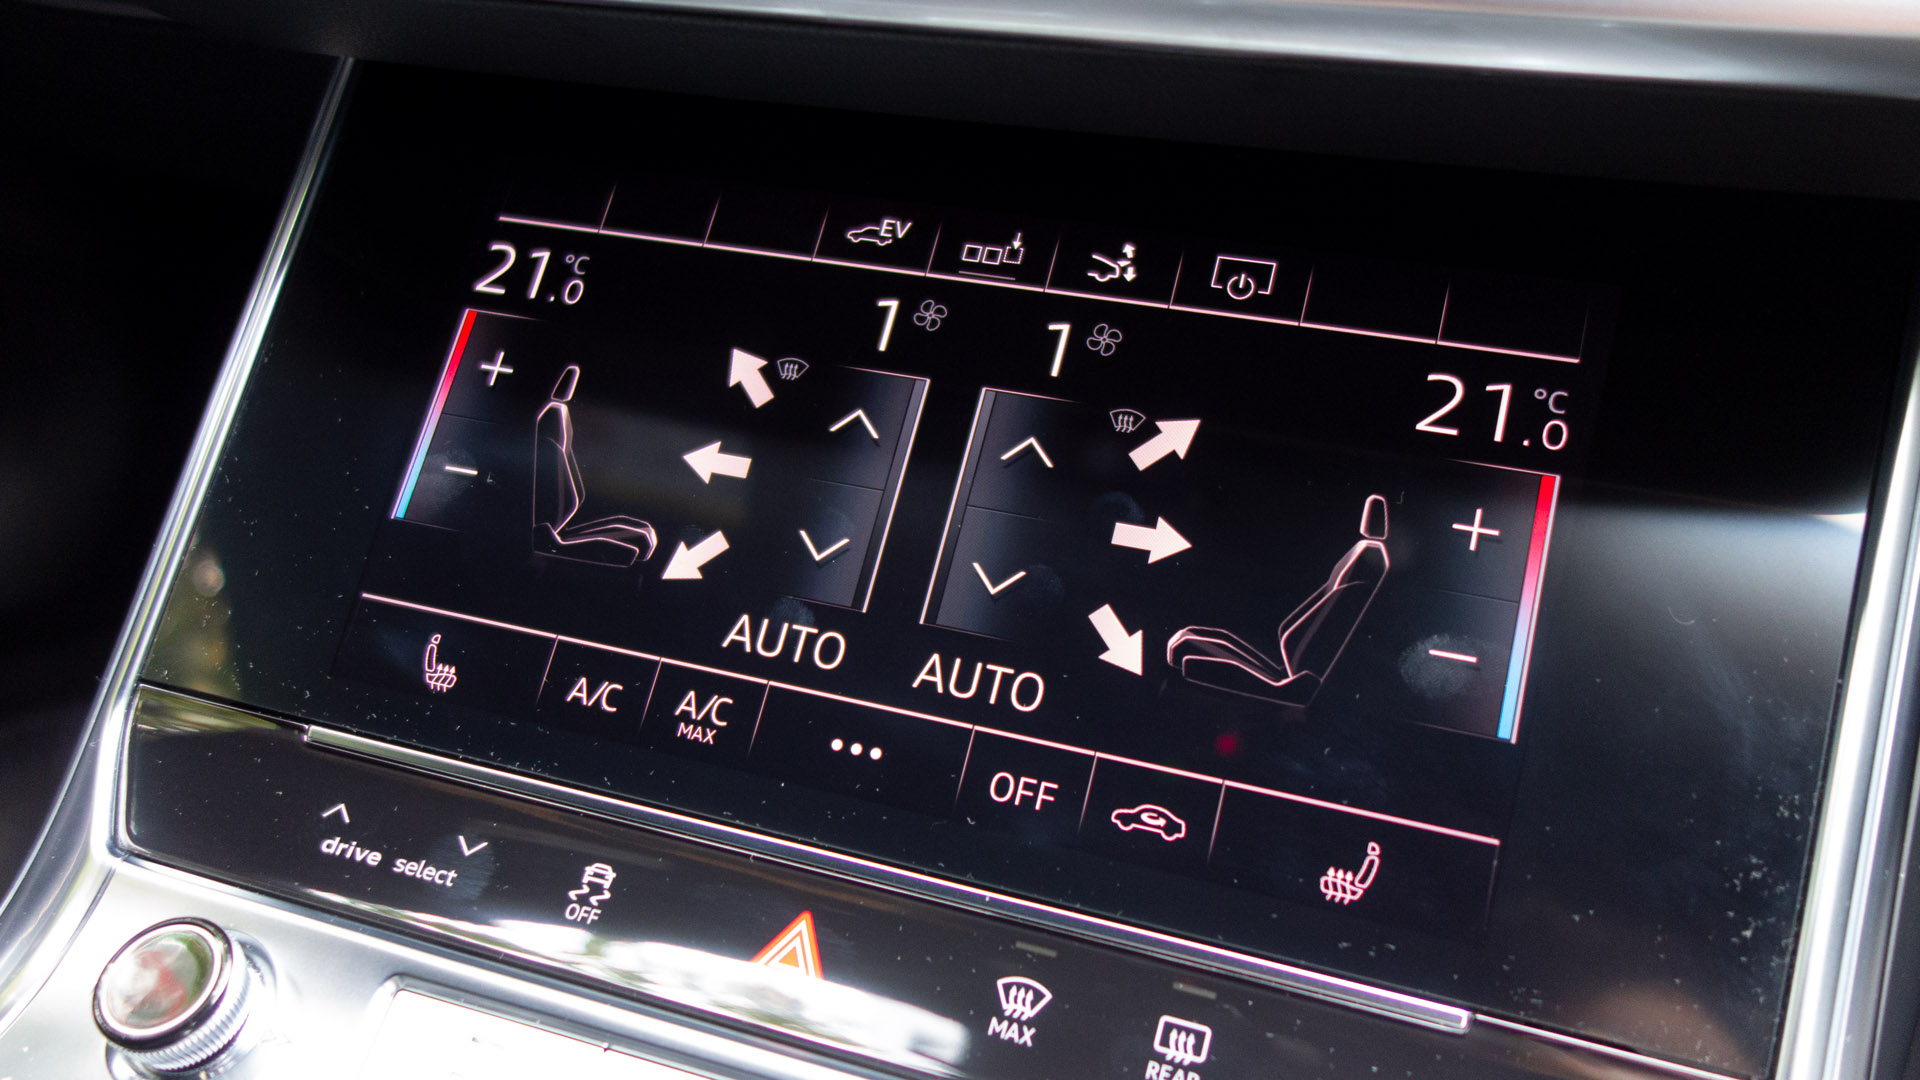 Audi A7 TFSIe climate controls